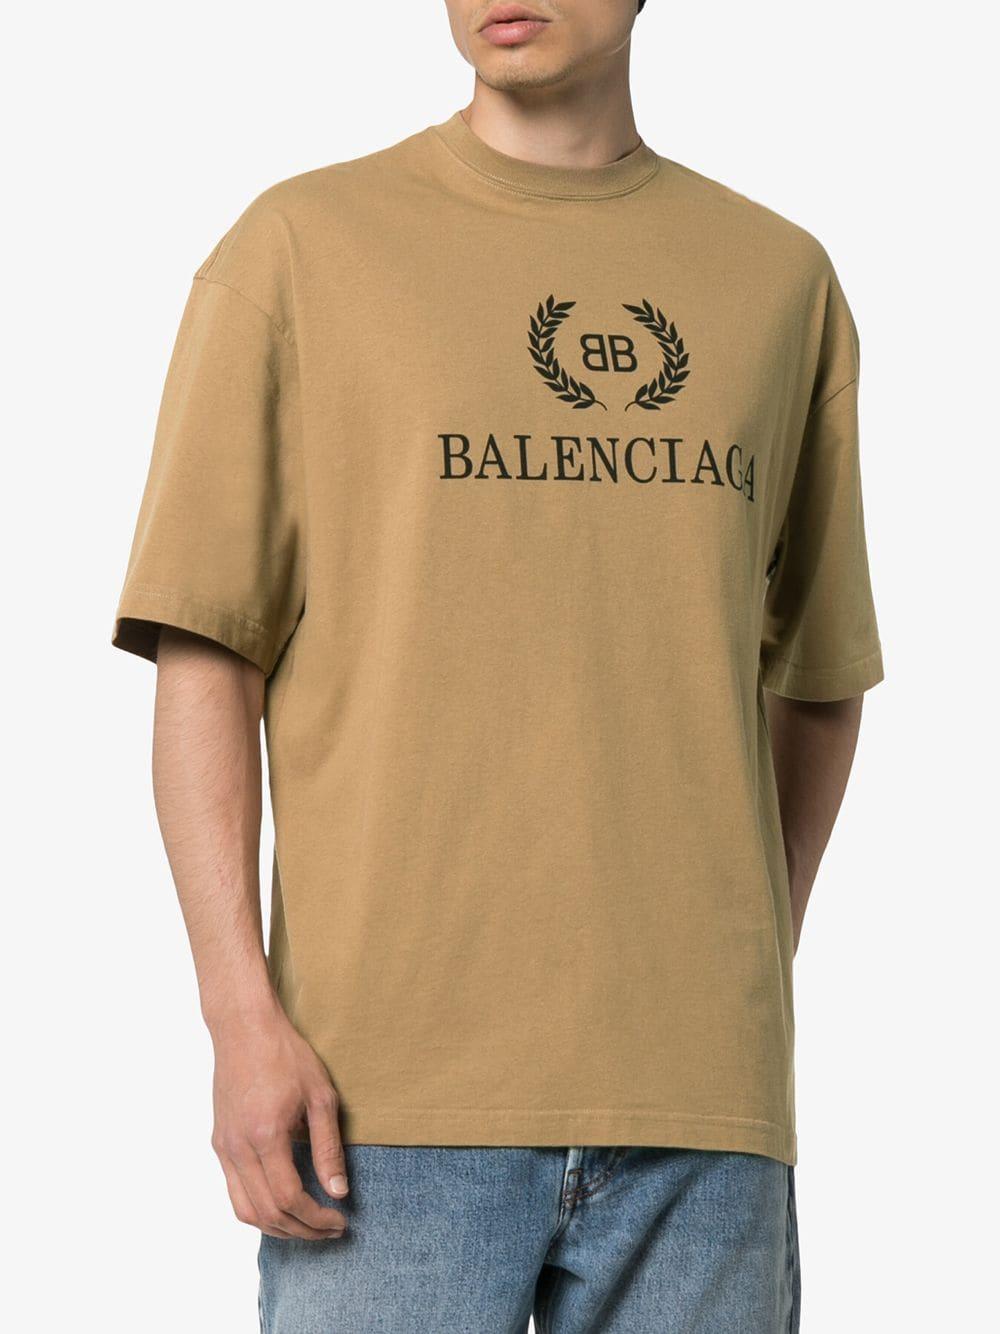 Balenciaga Bb T-shirt in Natural for Men